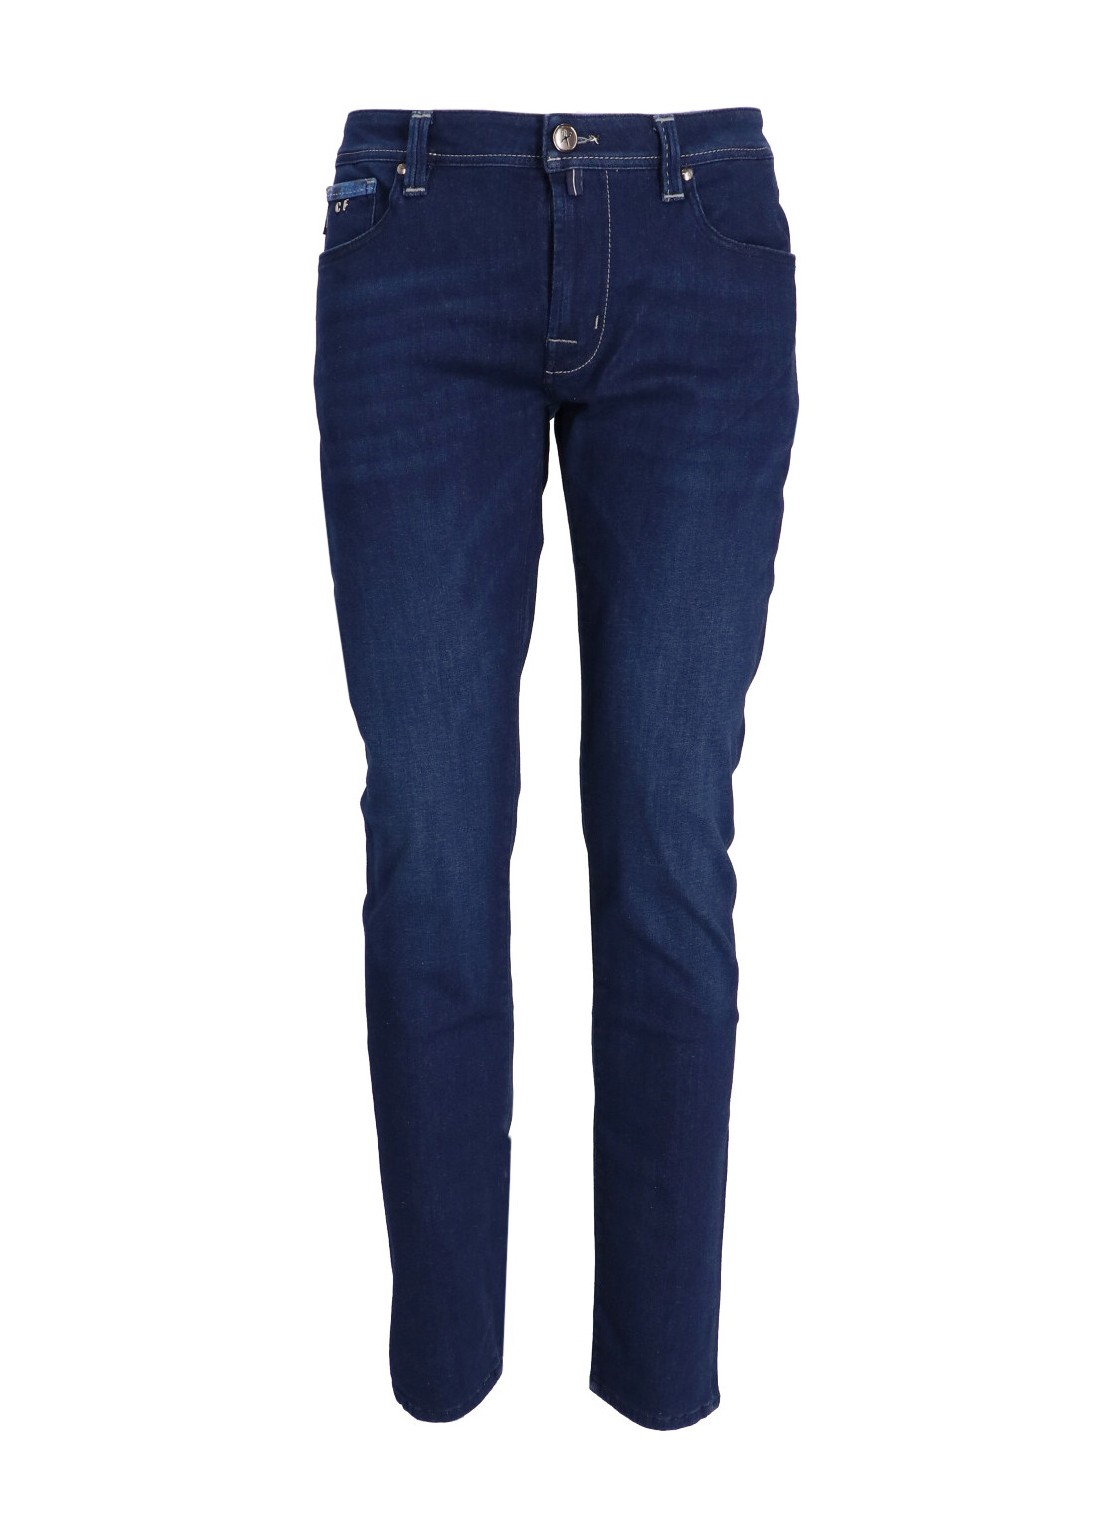 Pantalon jeans tramarossa denim man leonardo zip stre leonardo zip stre 23i13 talla 33
 